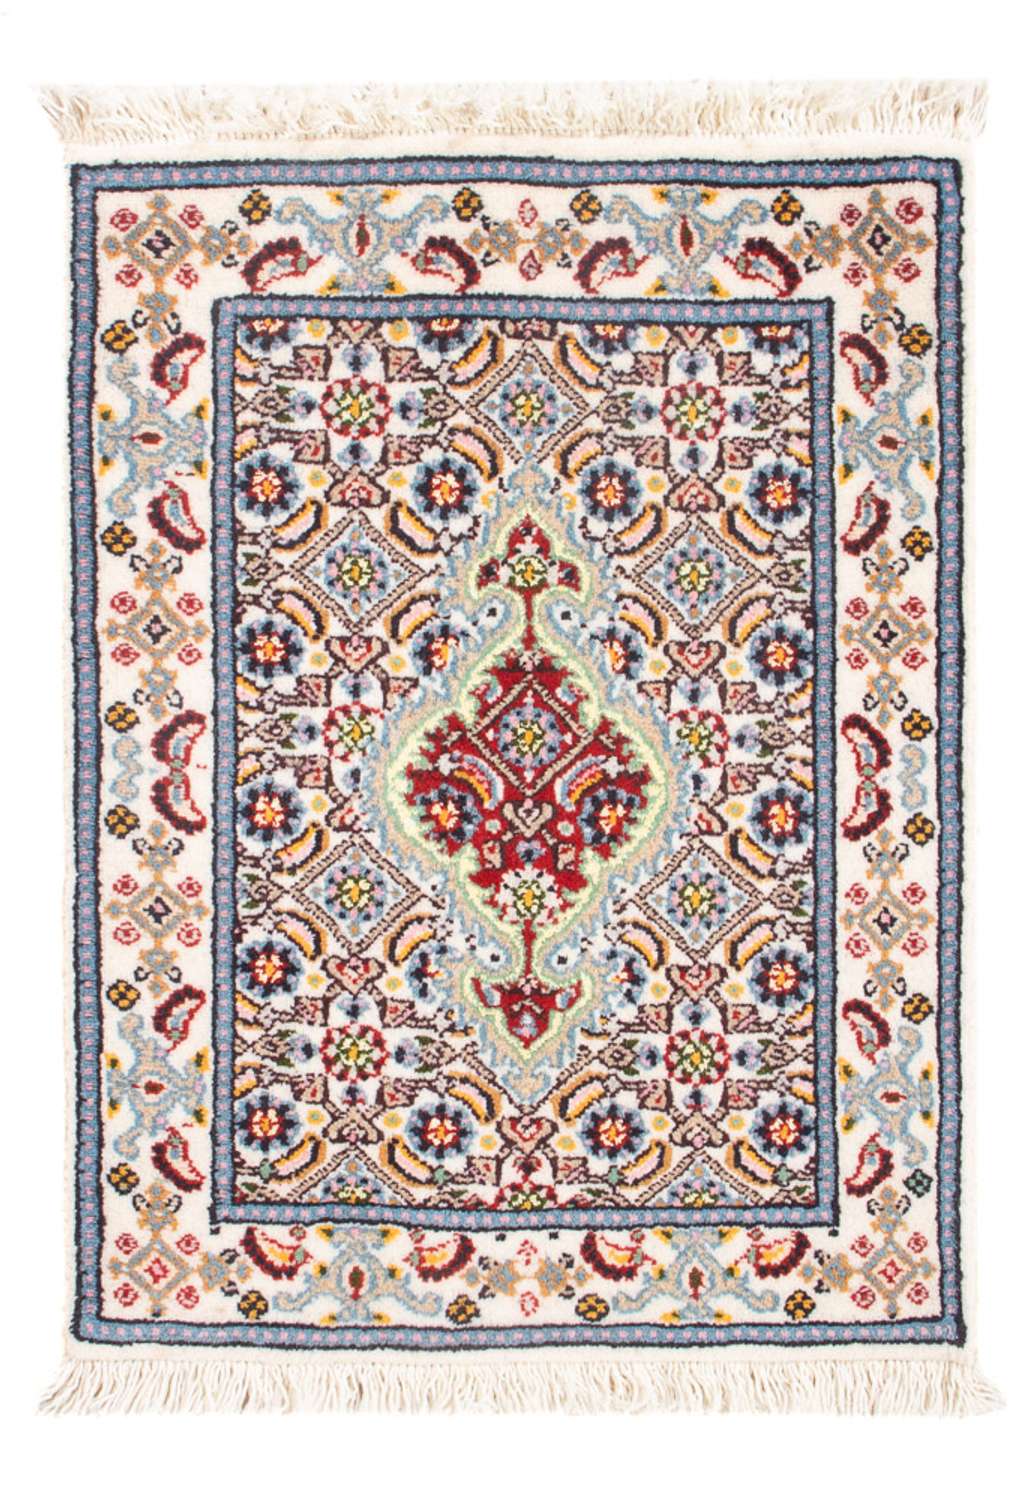 Tapis persan - Classique - Royal - 60 x 40 cm - multicolore